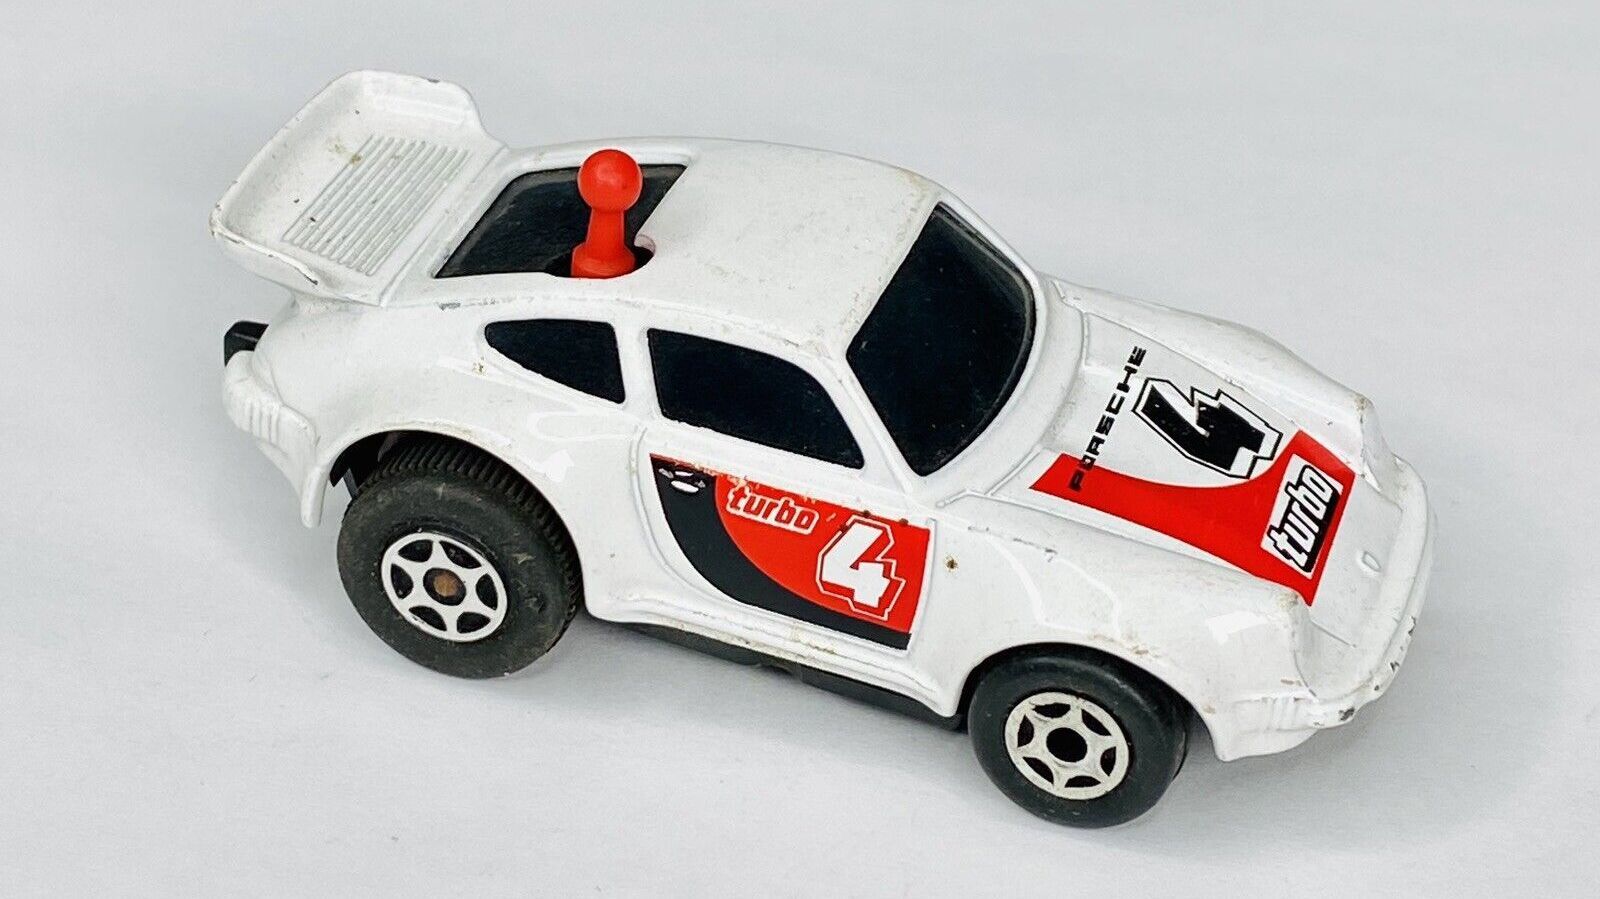 Porsche Turbo, Majorette Model Cars Wiki